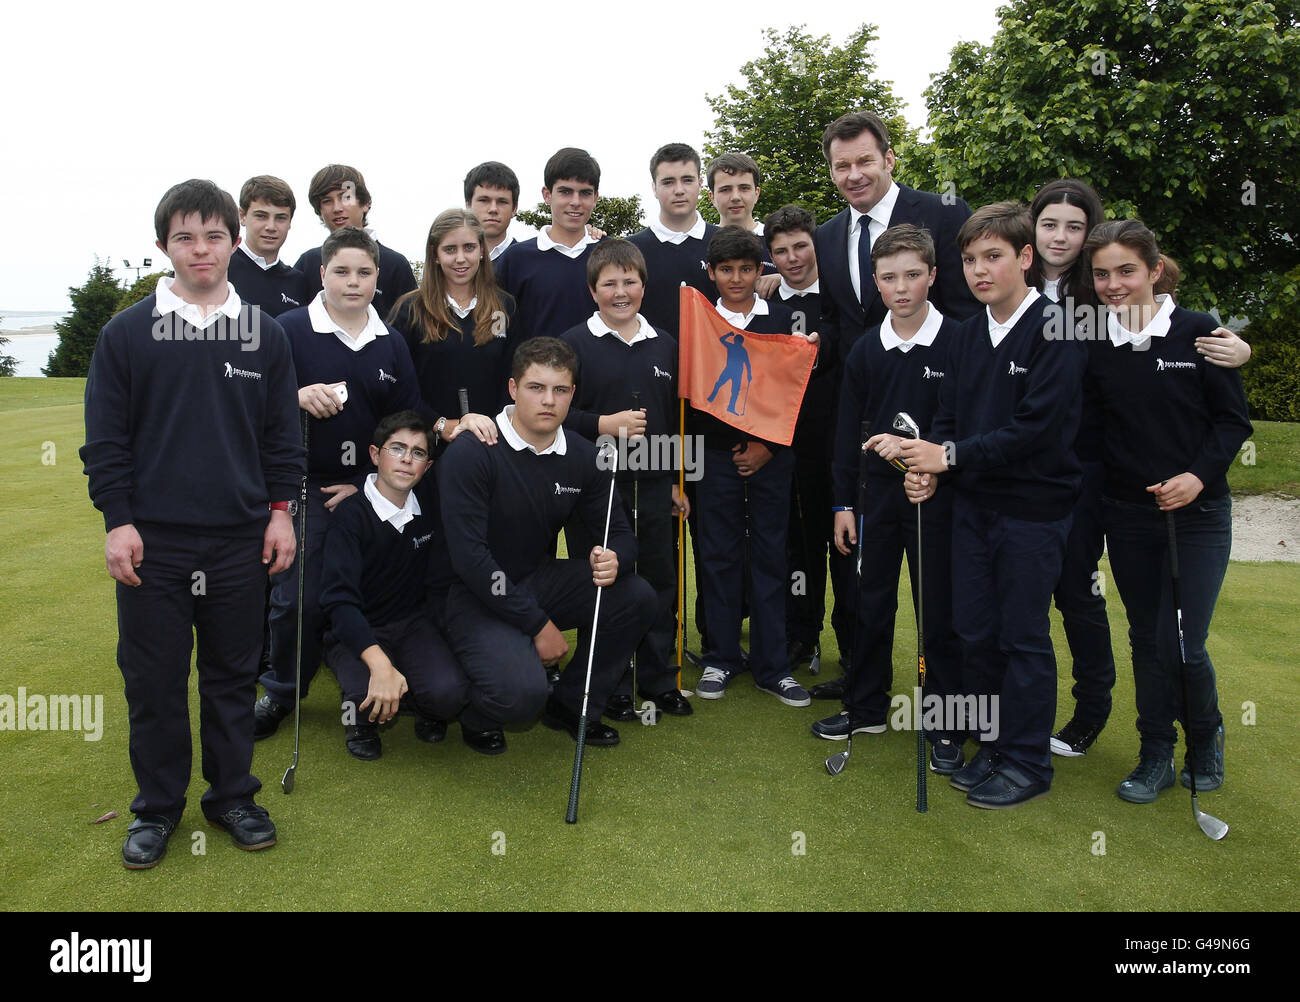 Golf - Seve Ballesteros Funeral - Pedrena - Spain Stock Photo